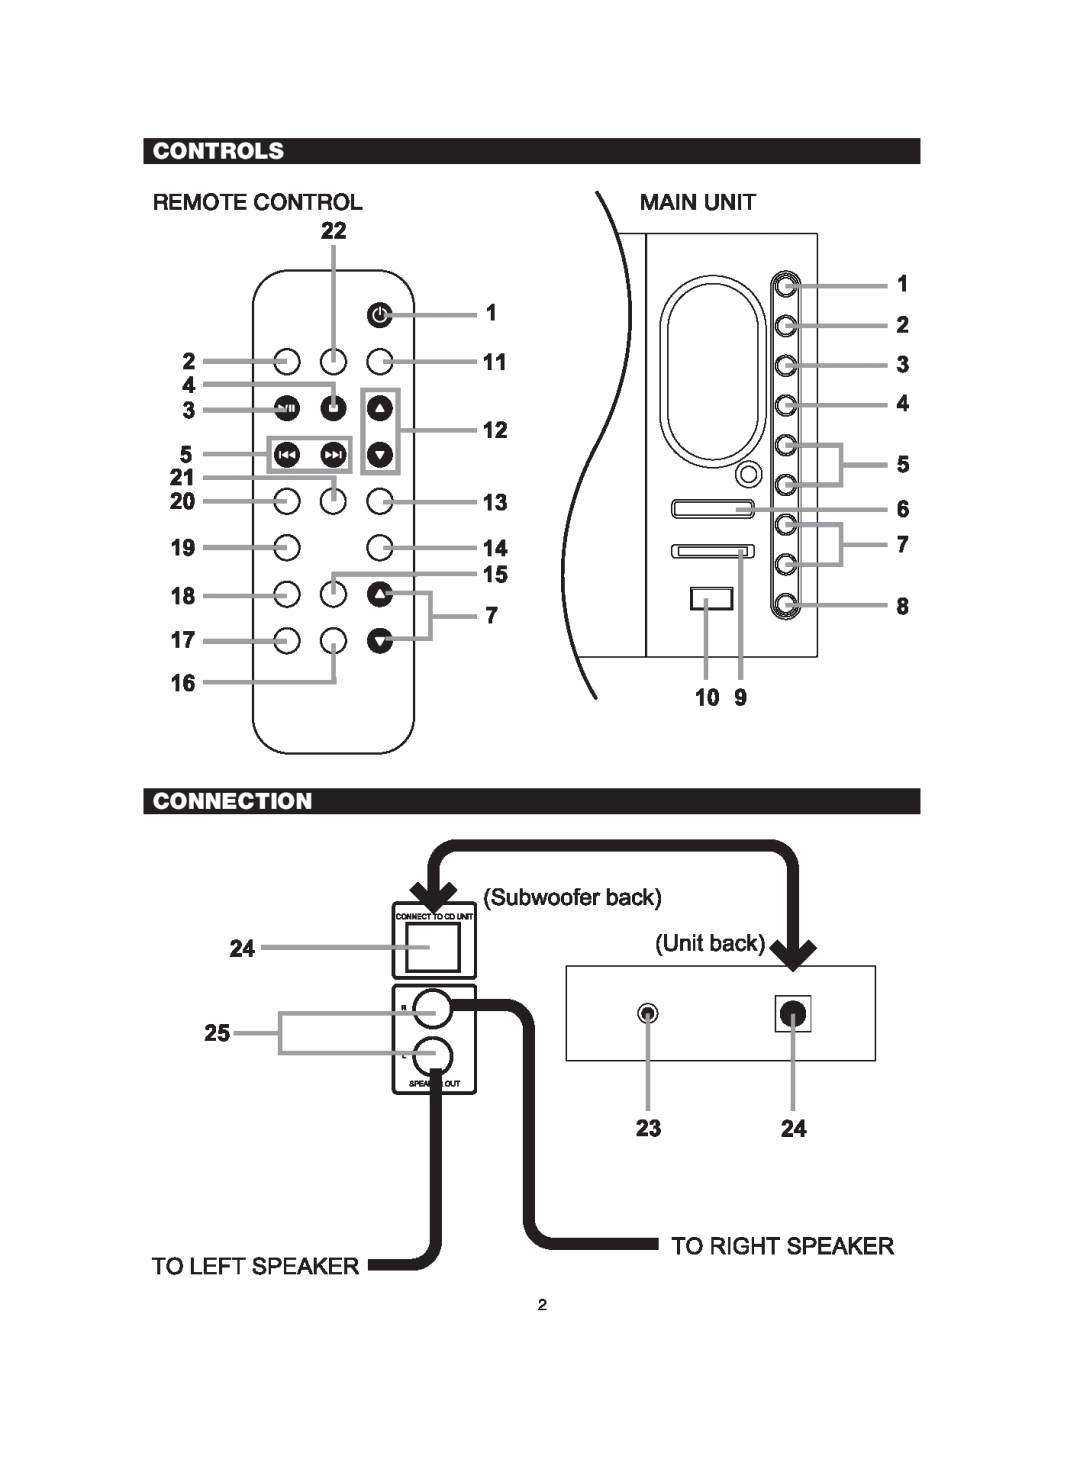 TDK NX-7CD manual Controls, Connection, Remote Control, Main Unit 